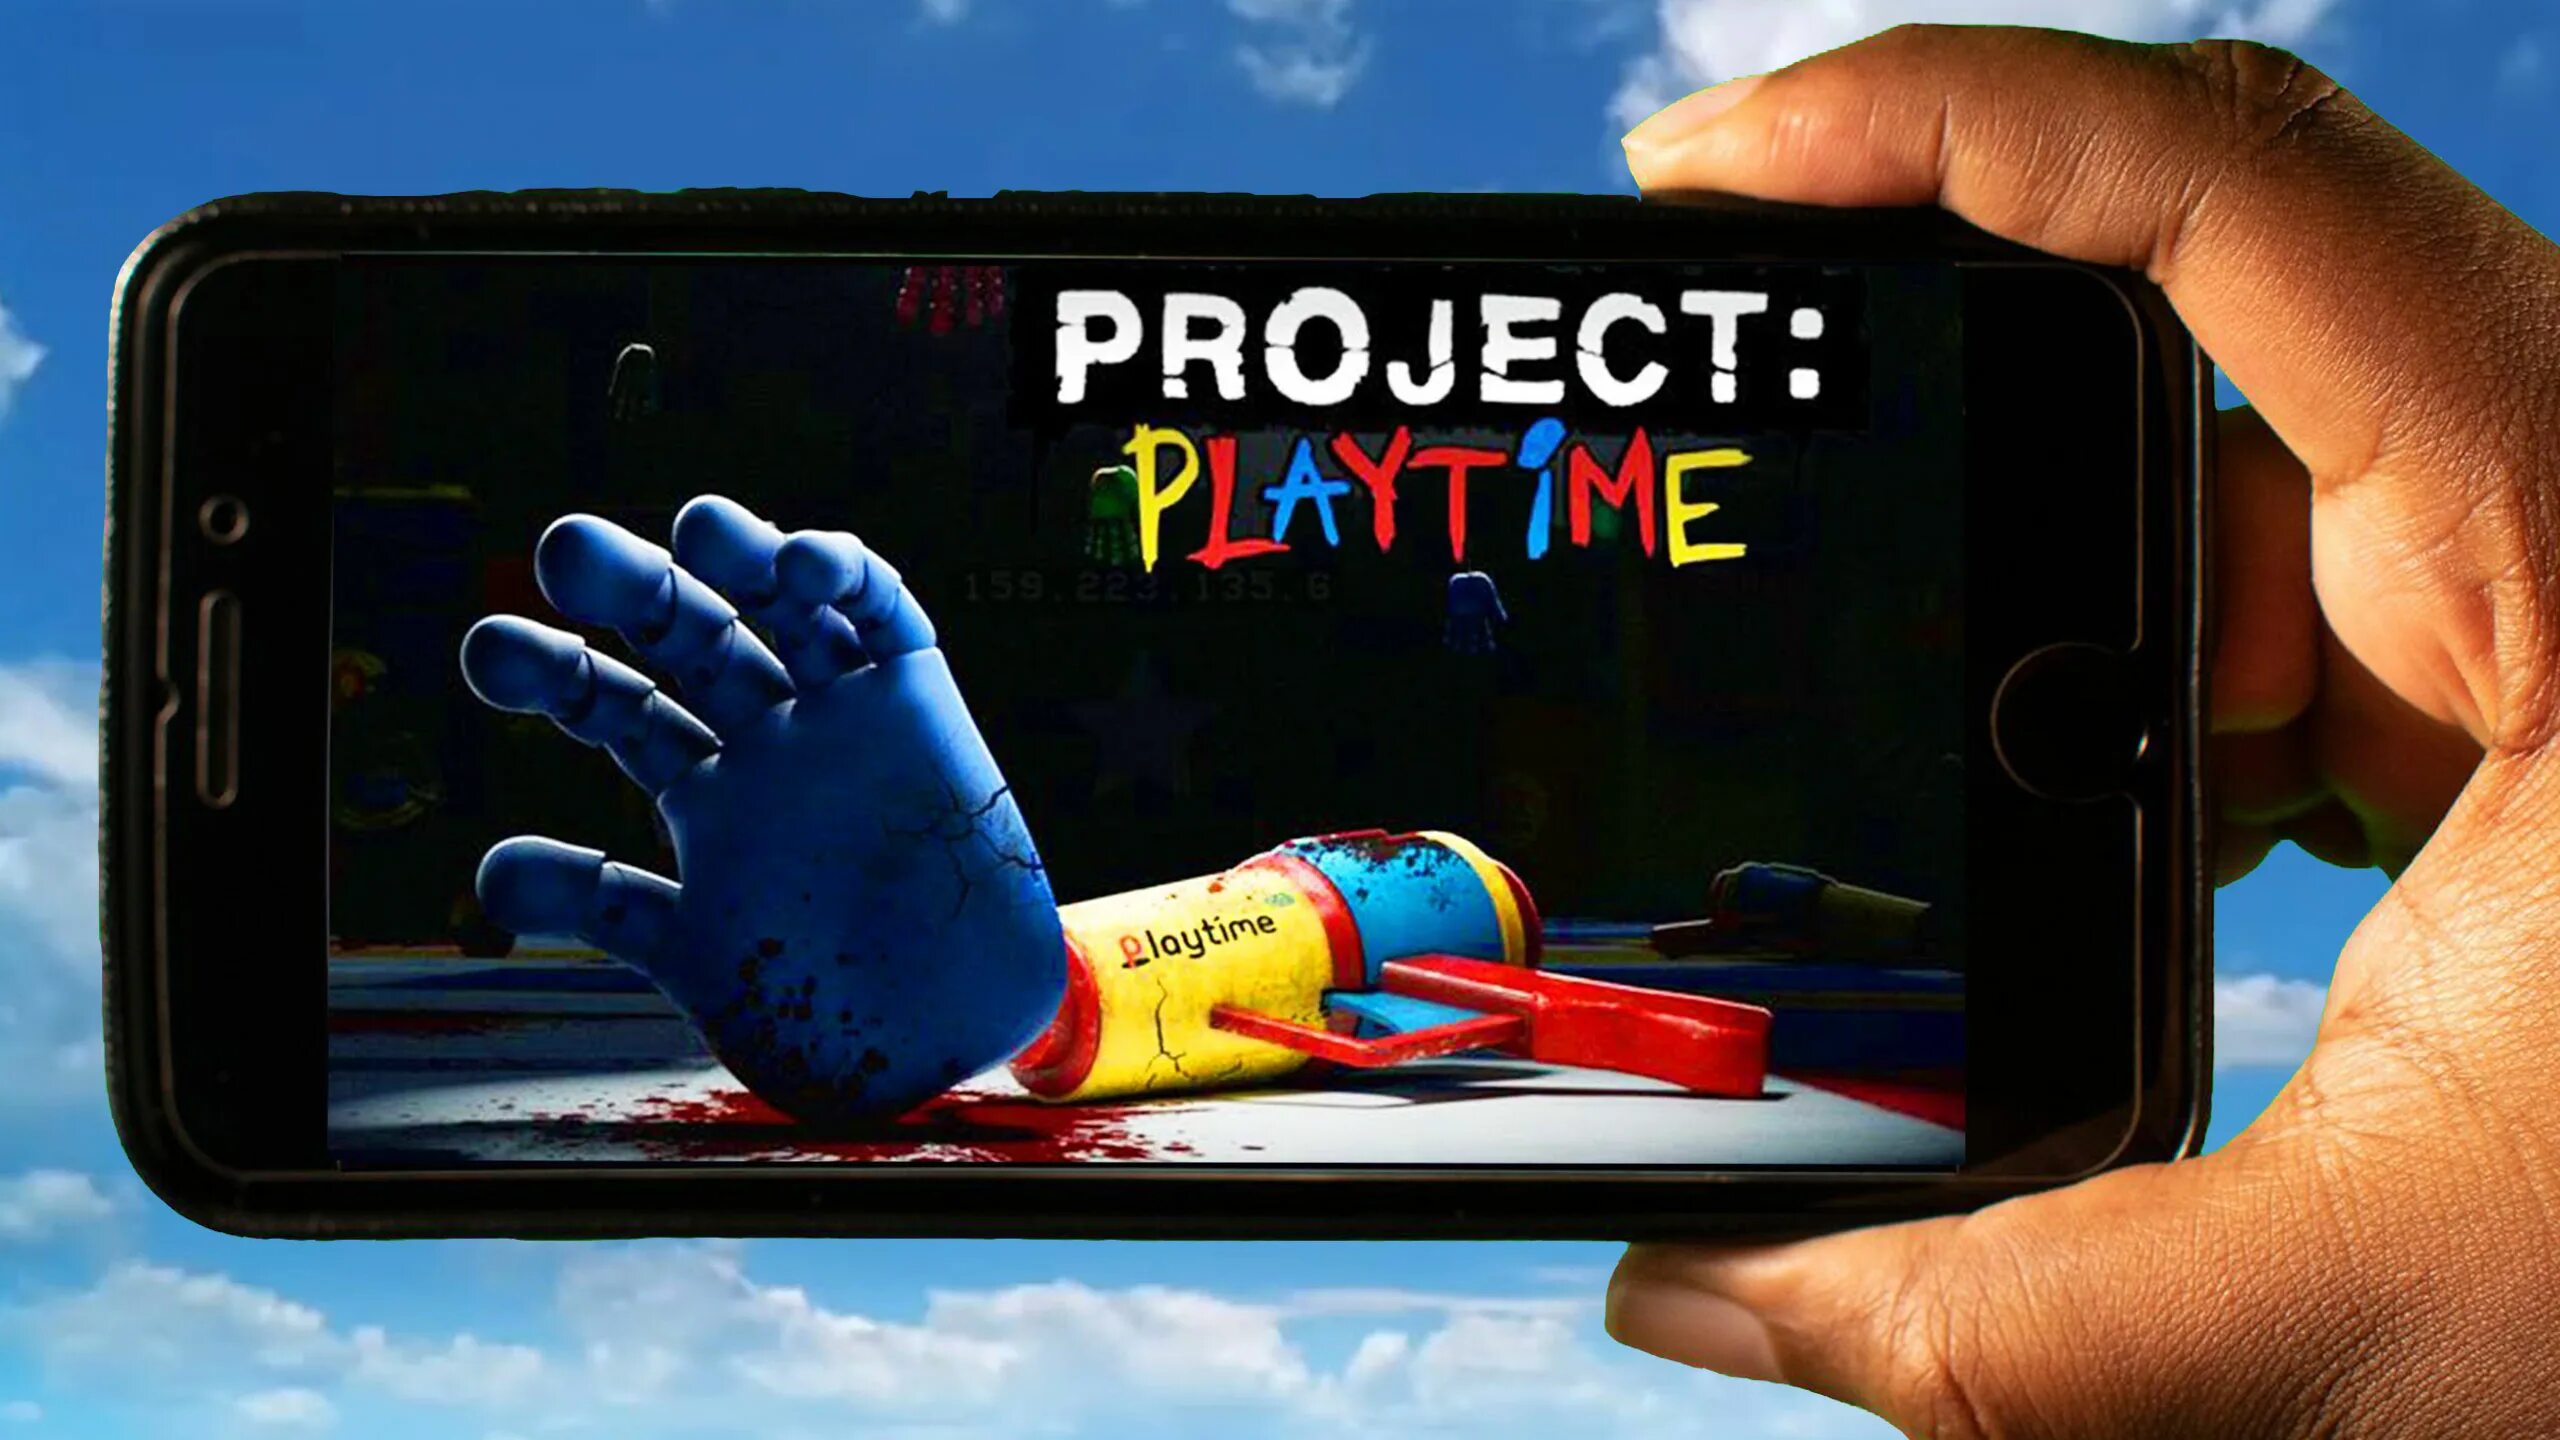 Проджект Плэйтайм. Project Playtime тикеты. Проект Play time mobile. Project Playtime Mob. Project playtime download